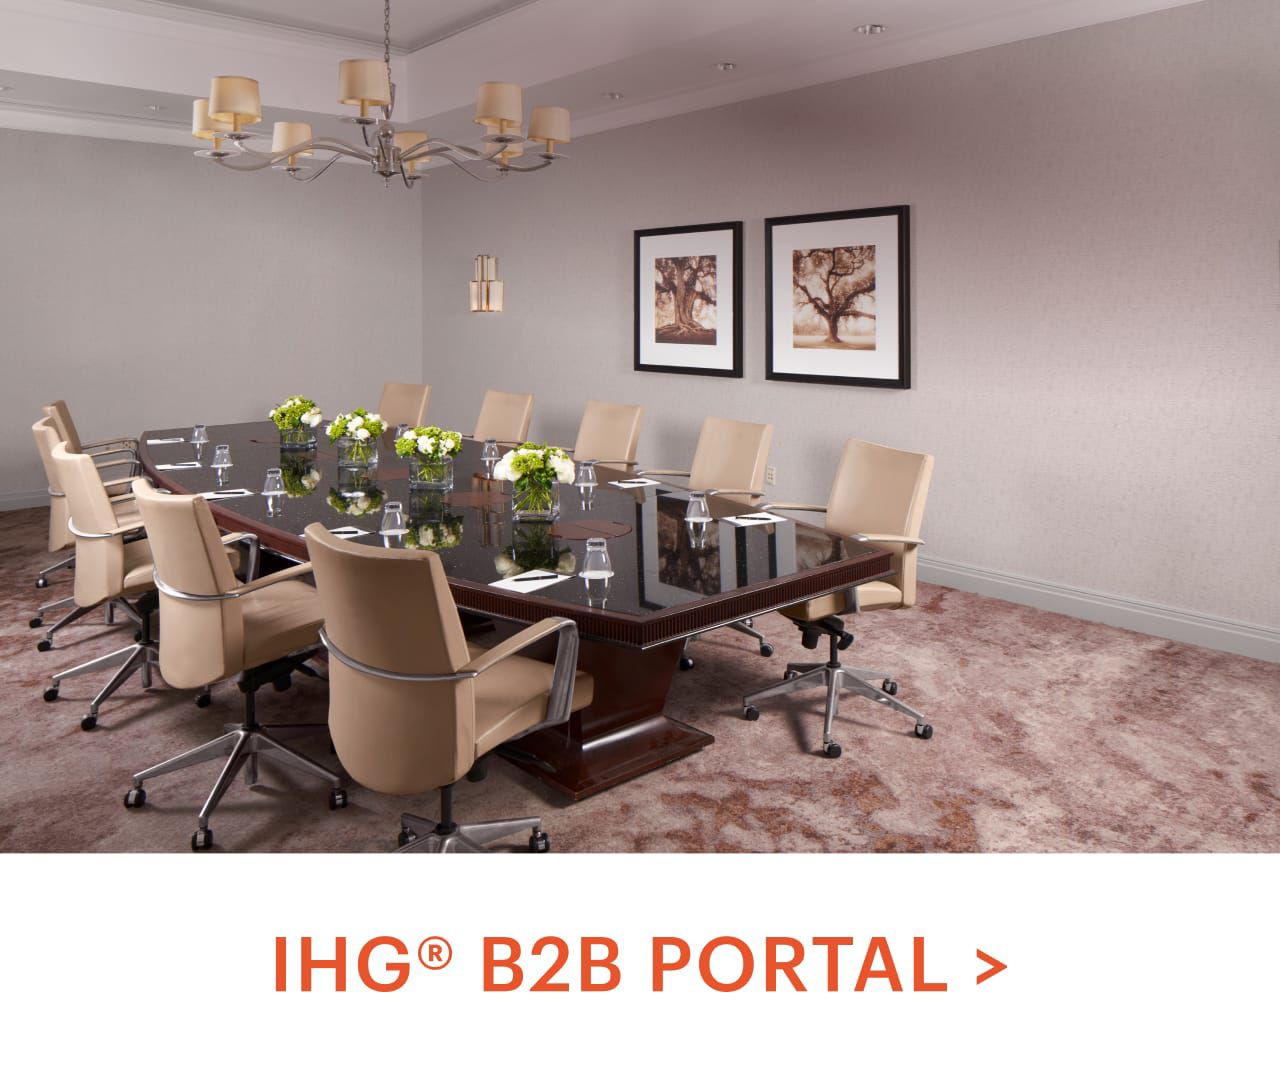 IHG B2B Portal